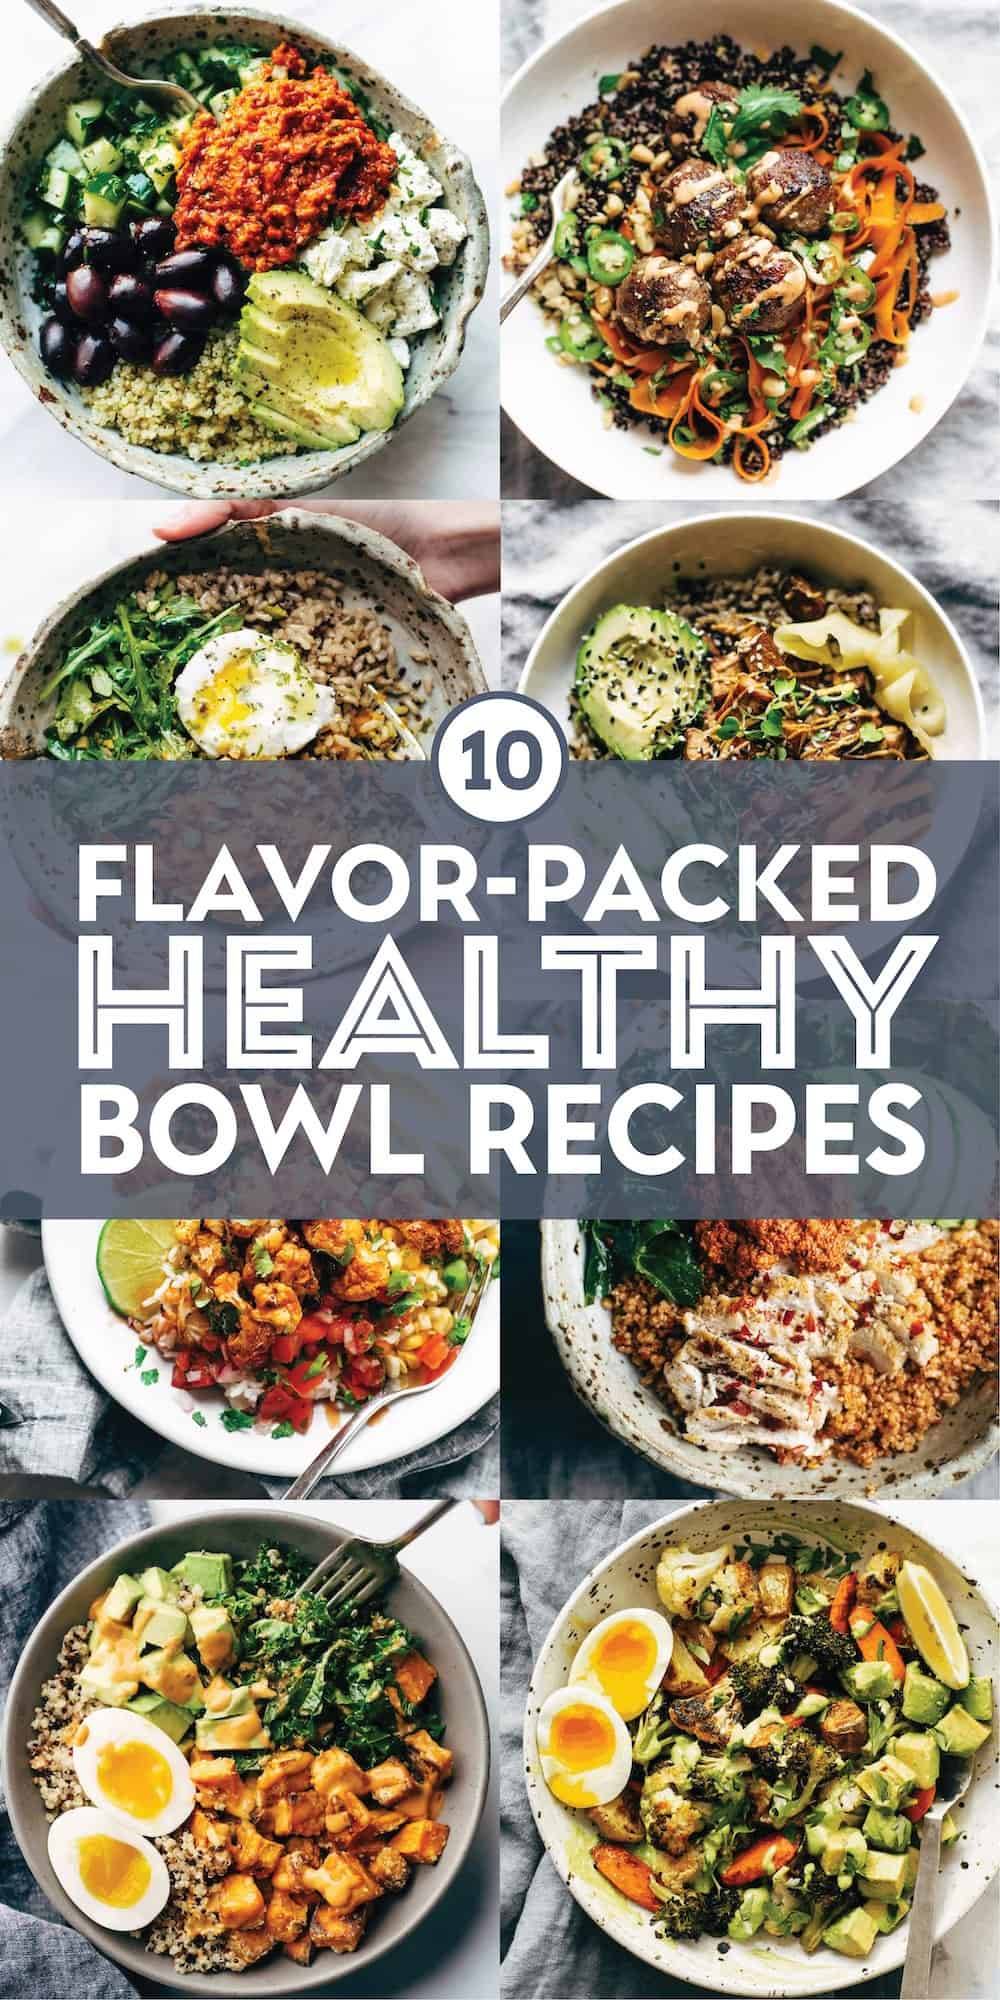 https://pinchofyum.com/wp-content/uploads/Healthy-Bowl-Recipes-Pin.jpg